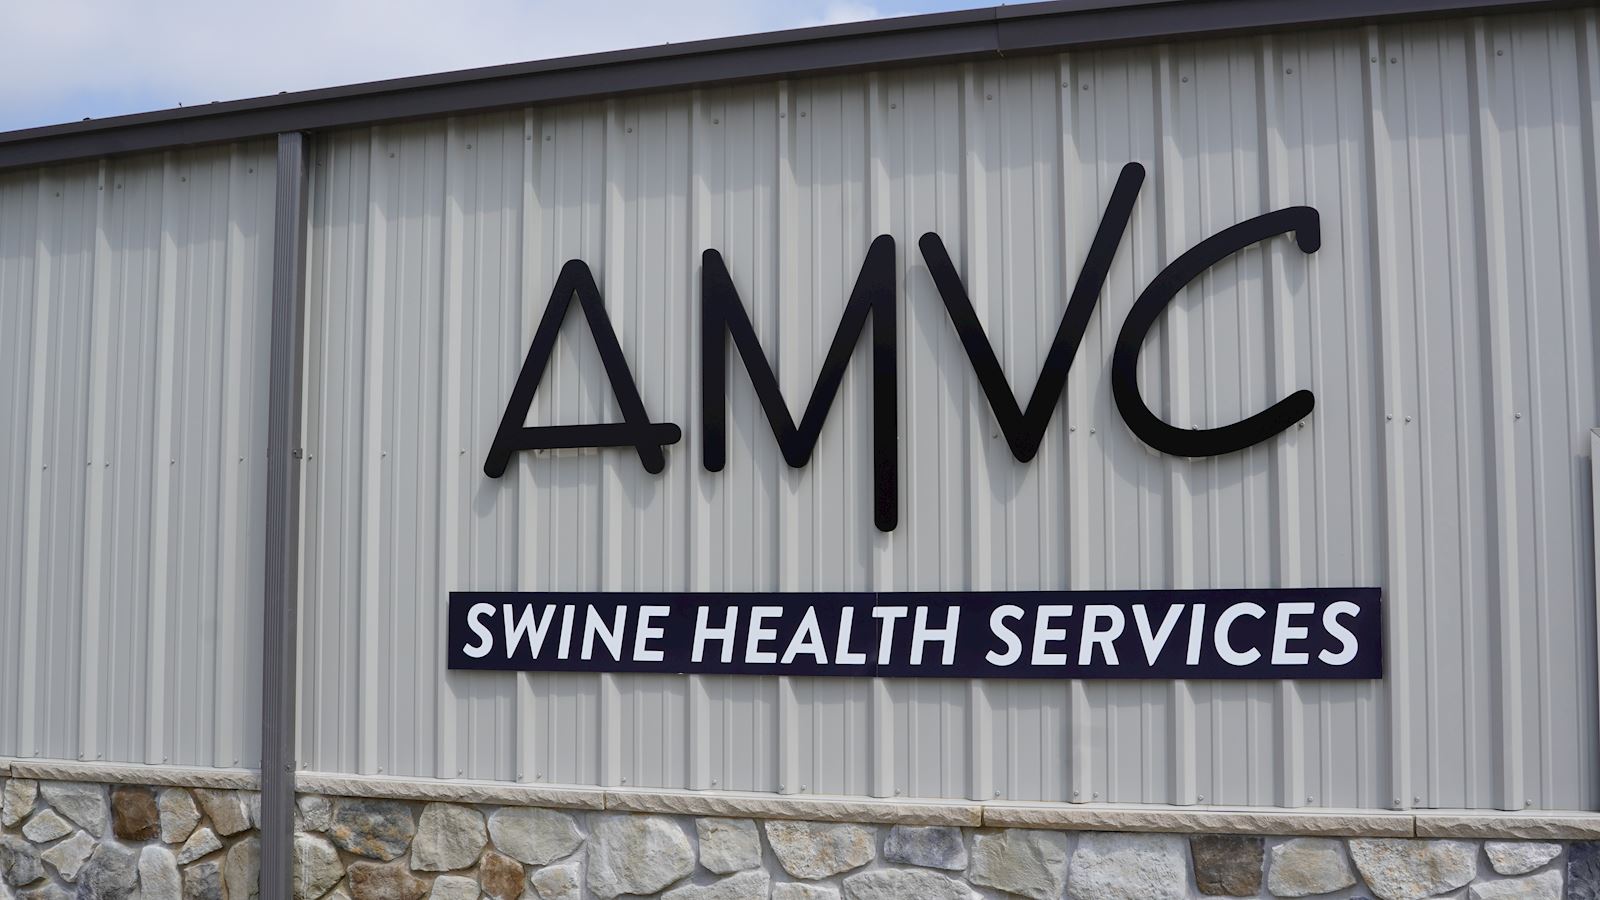 Swine Health Services